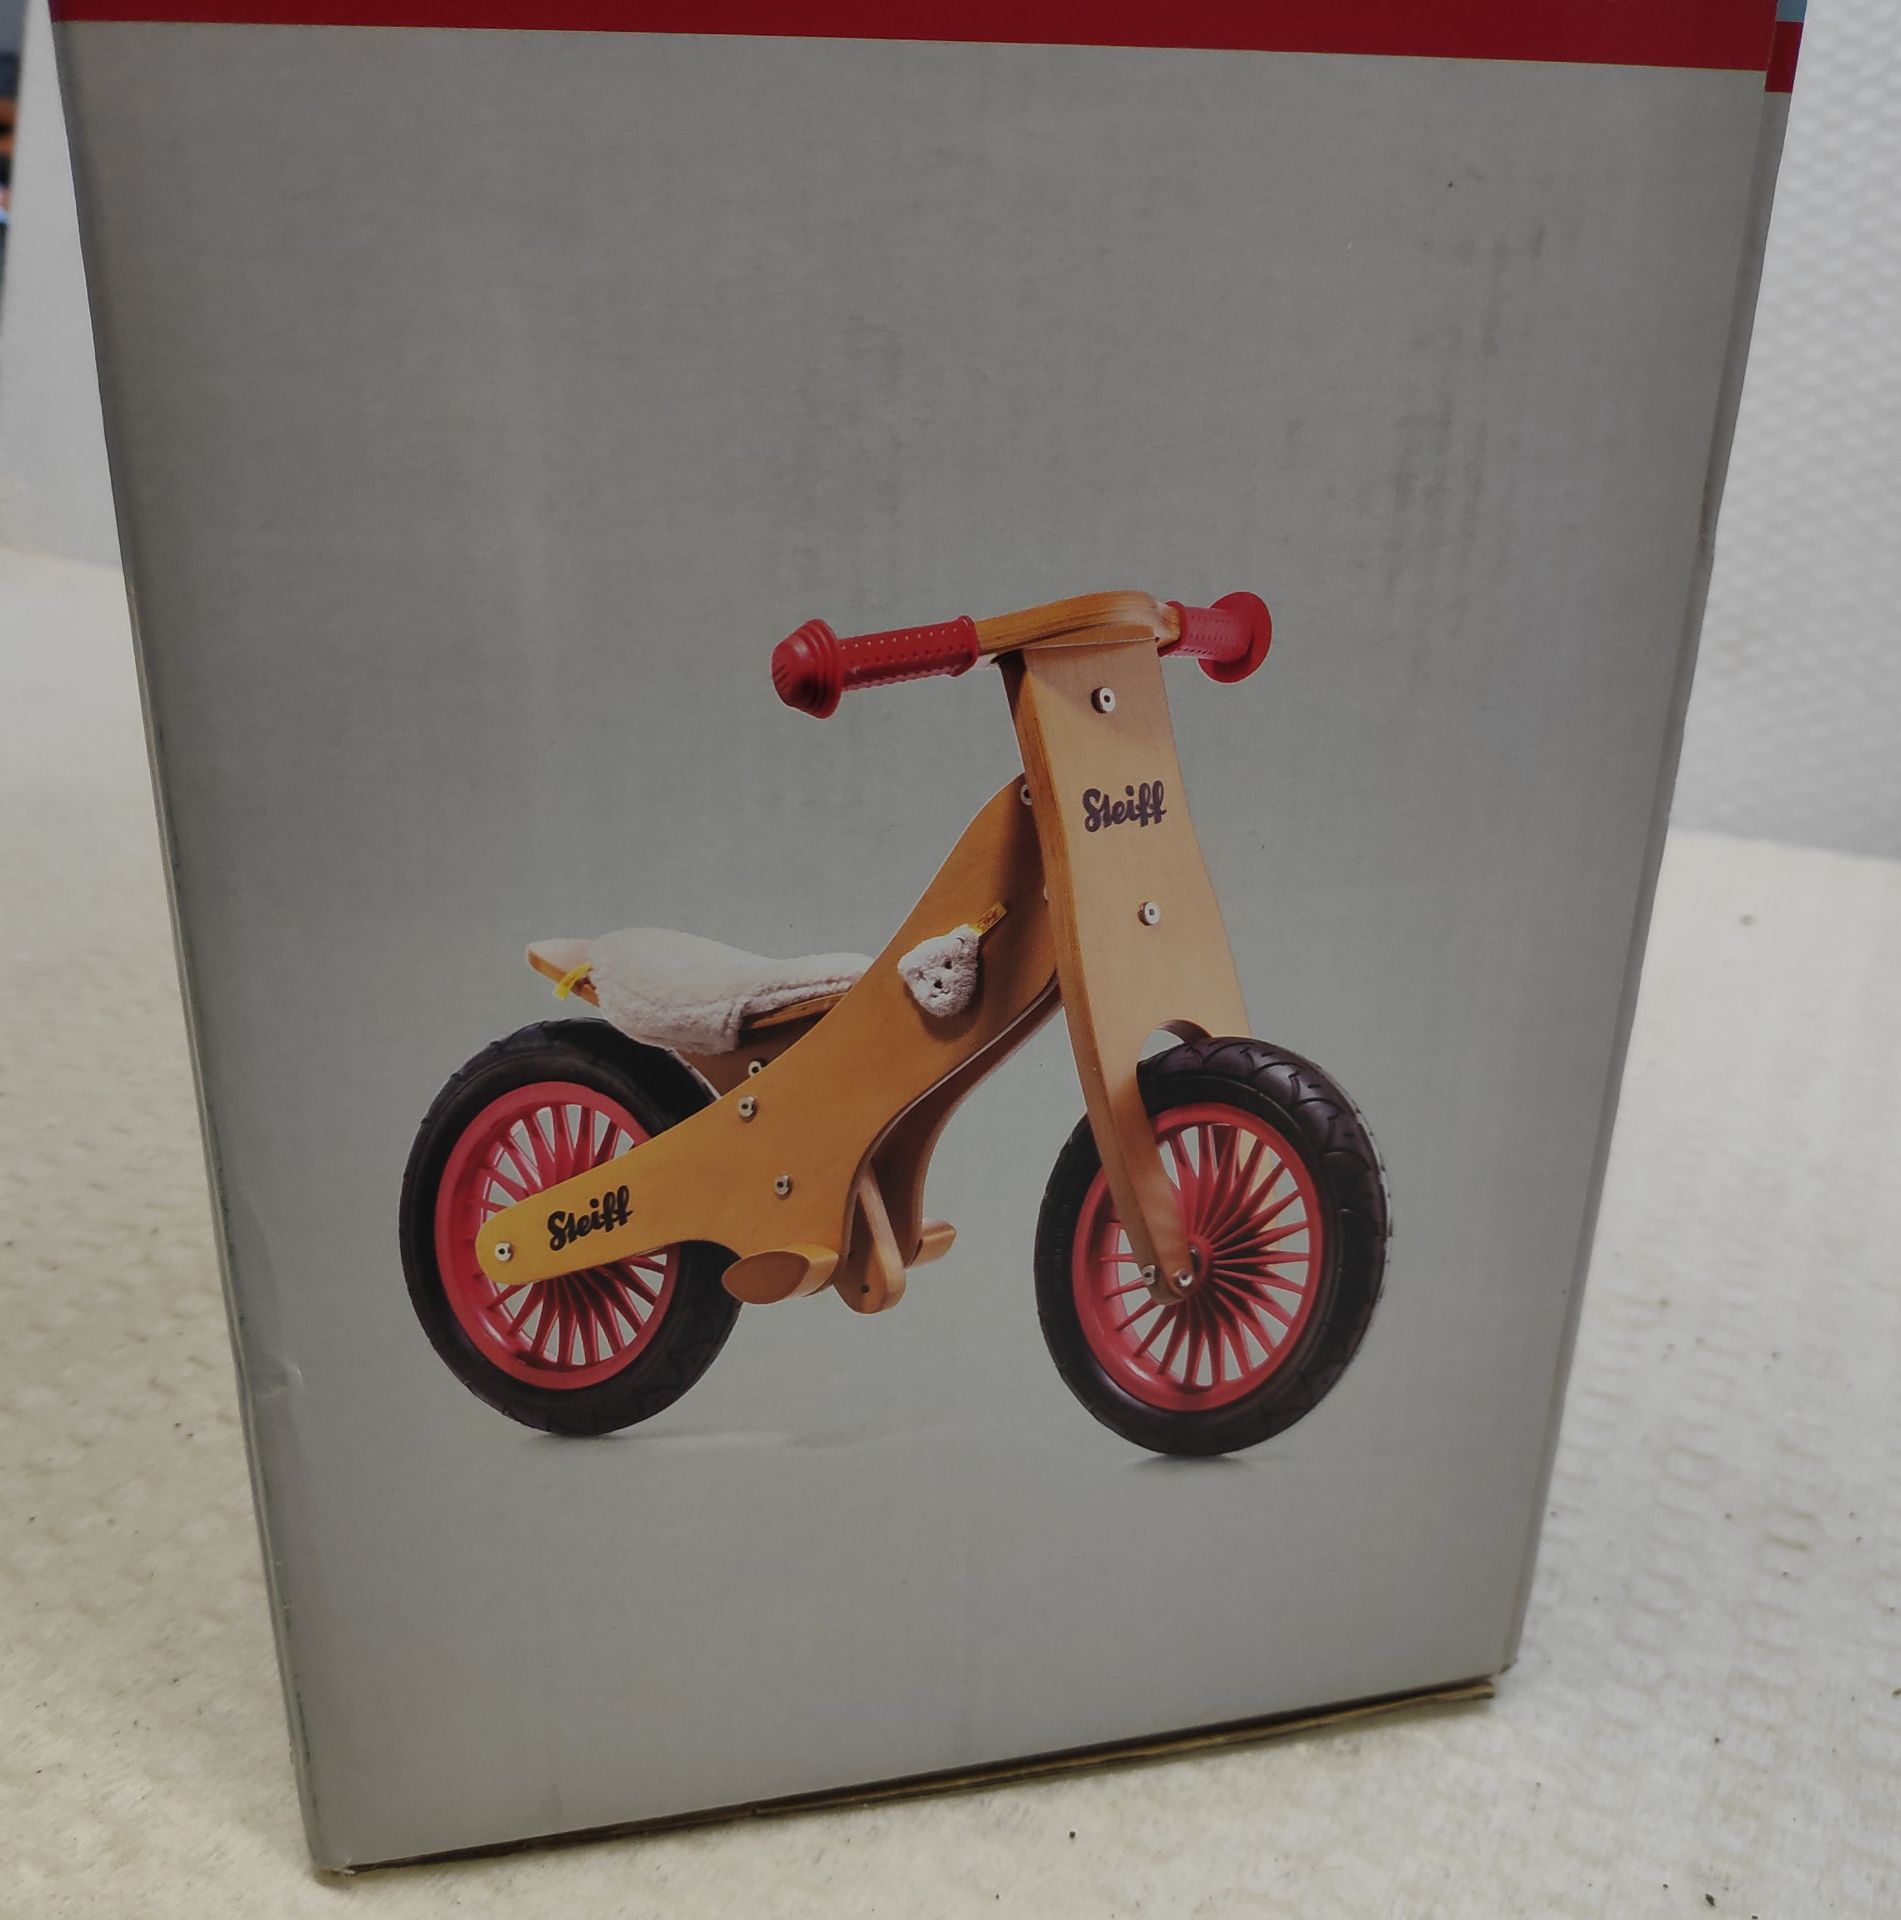 1 x Steiff Wooden Balance Bike Classic - New/Boxed